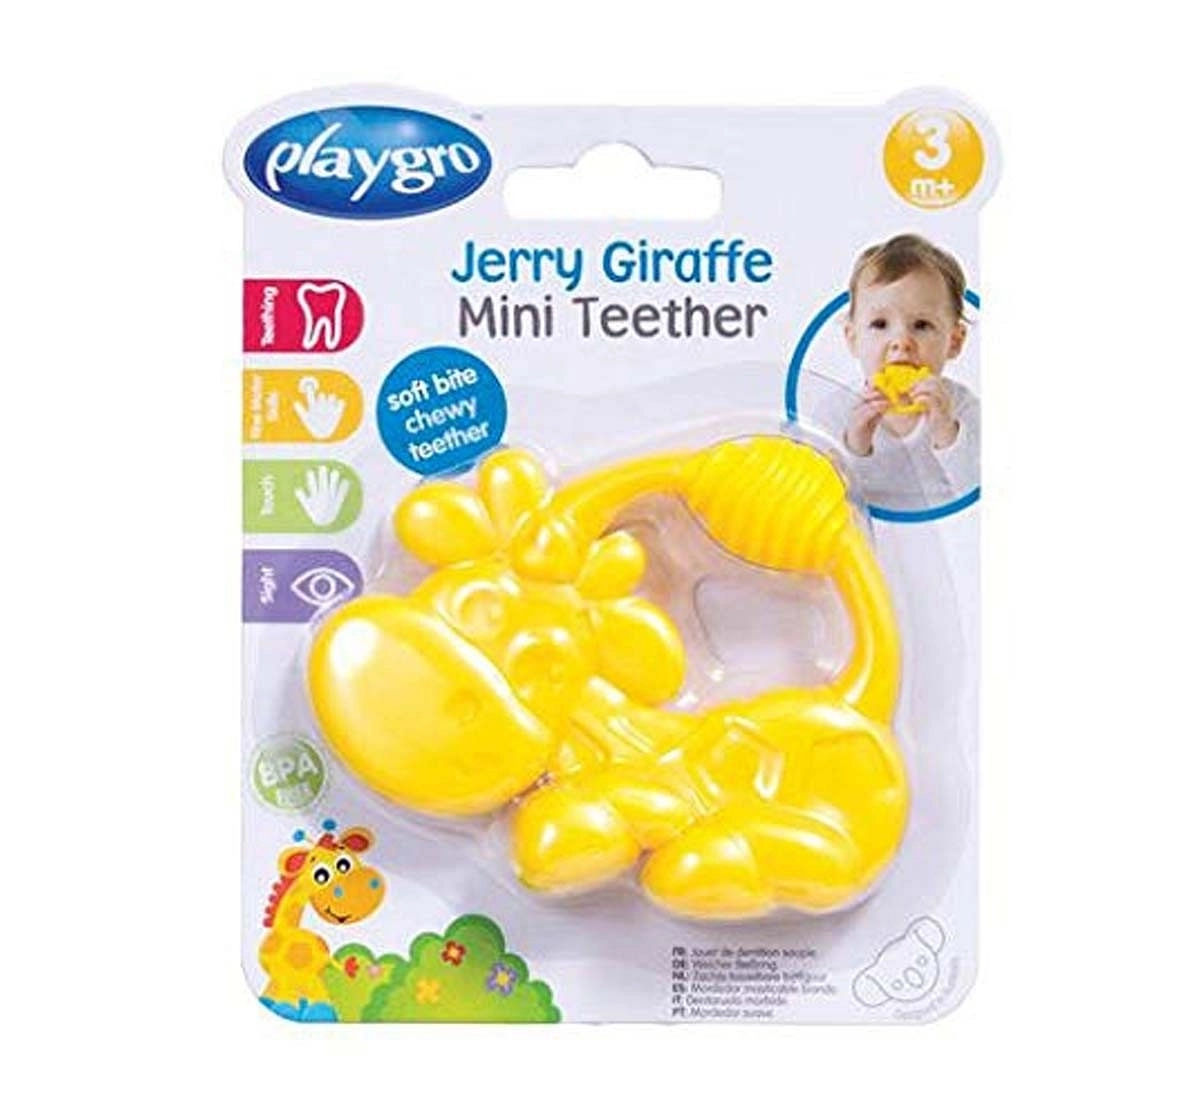 Playgro Jerry Giraffe Mini Teether New Born for Kids Age 6Y+